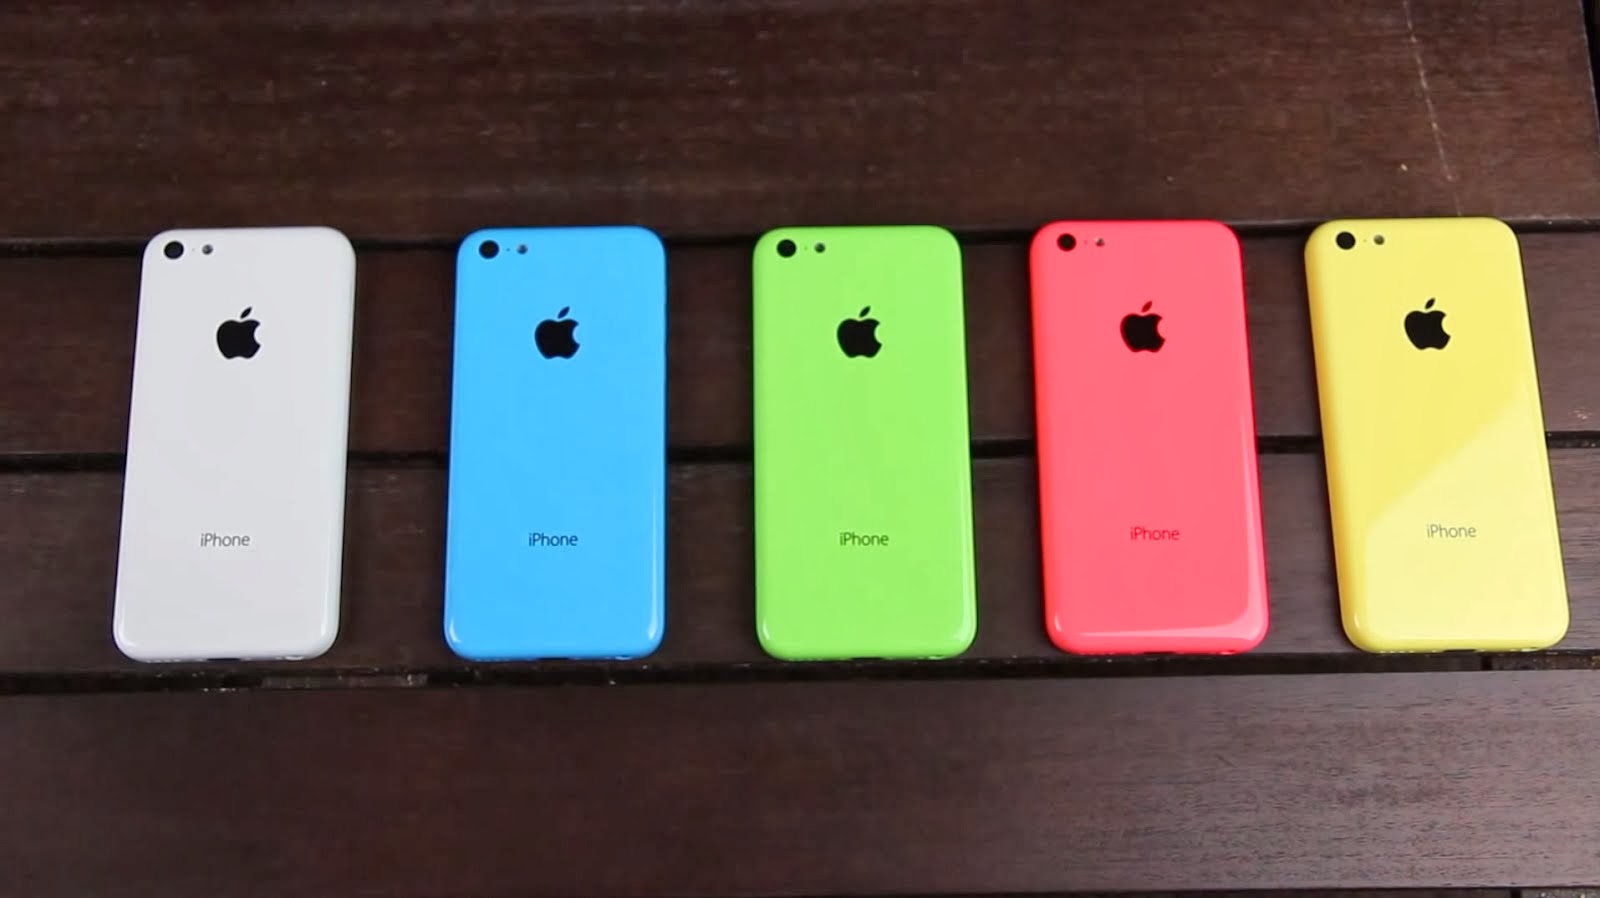 iPhone 5c Latest Colours!